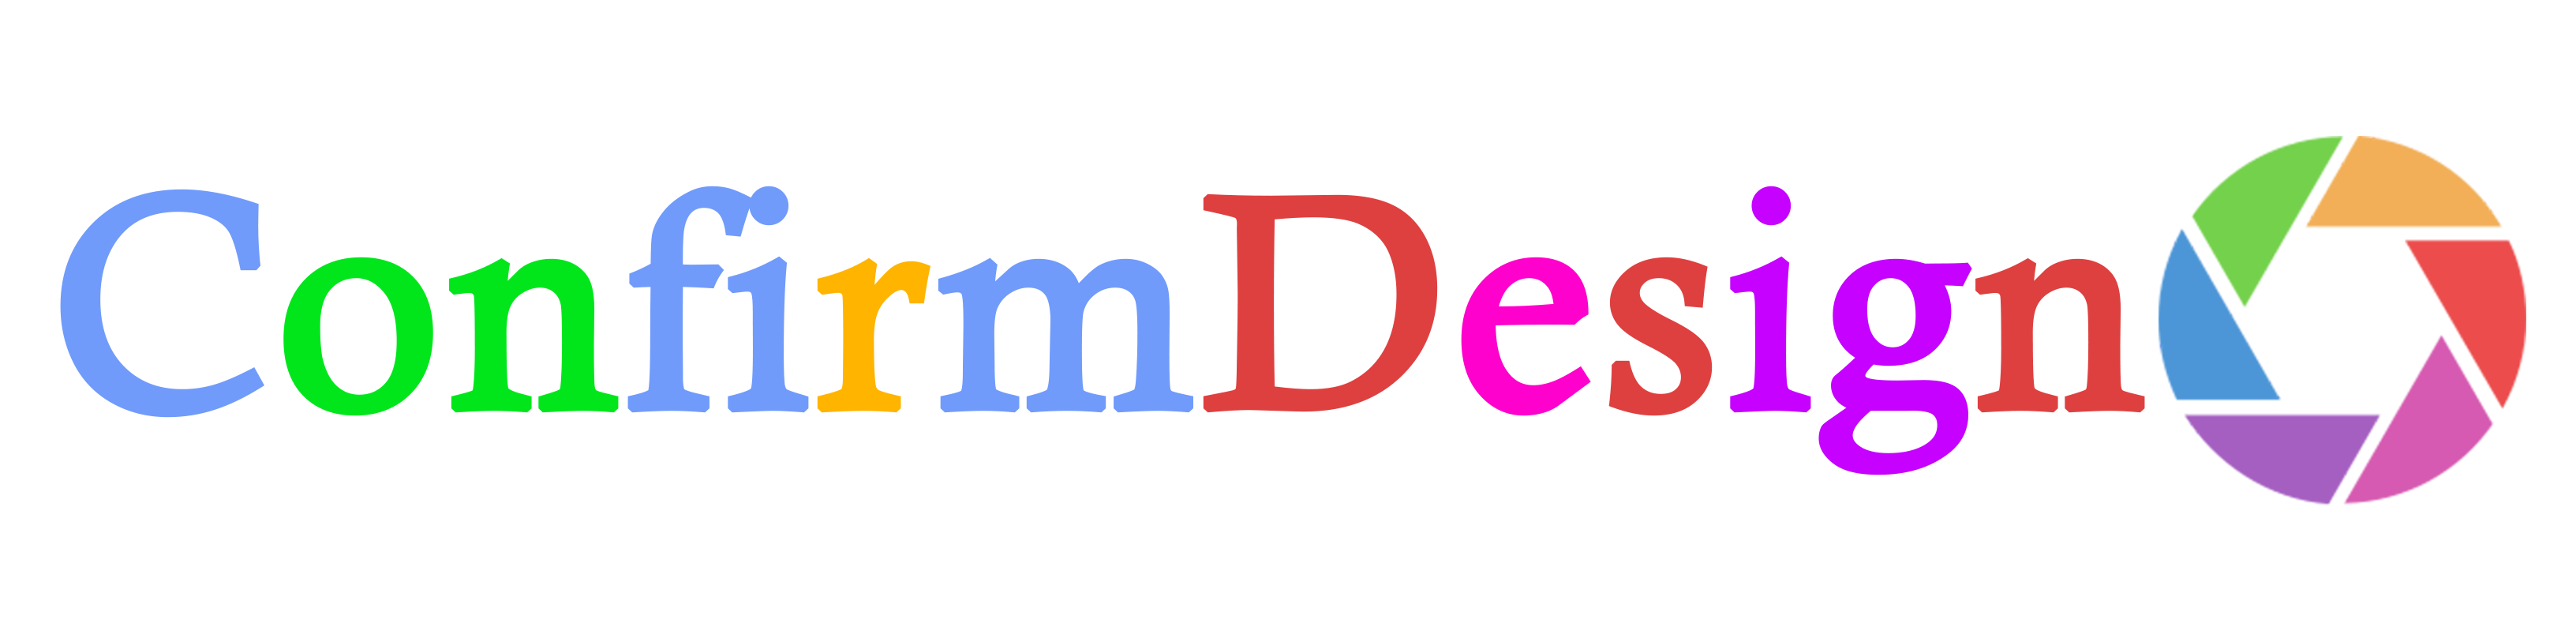 ConfirmDesign Logo Main